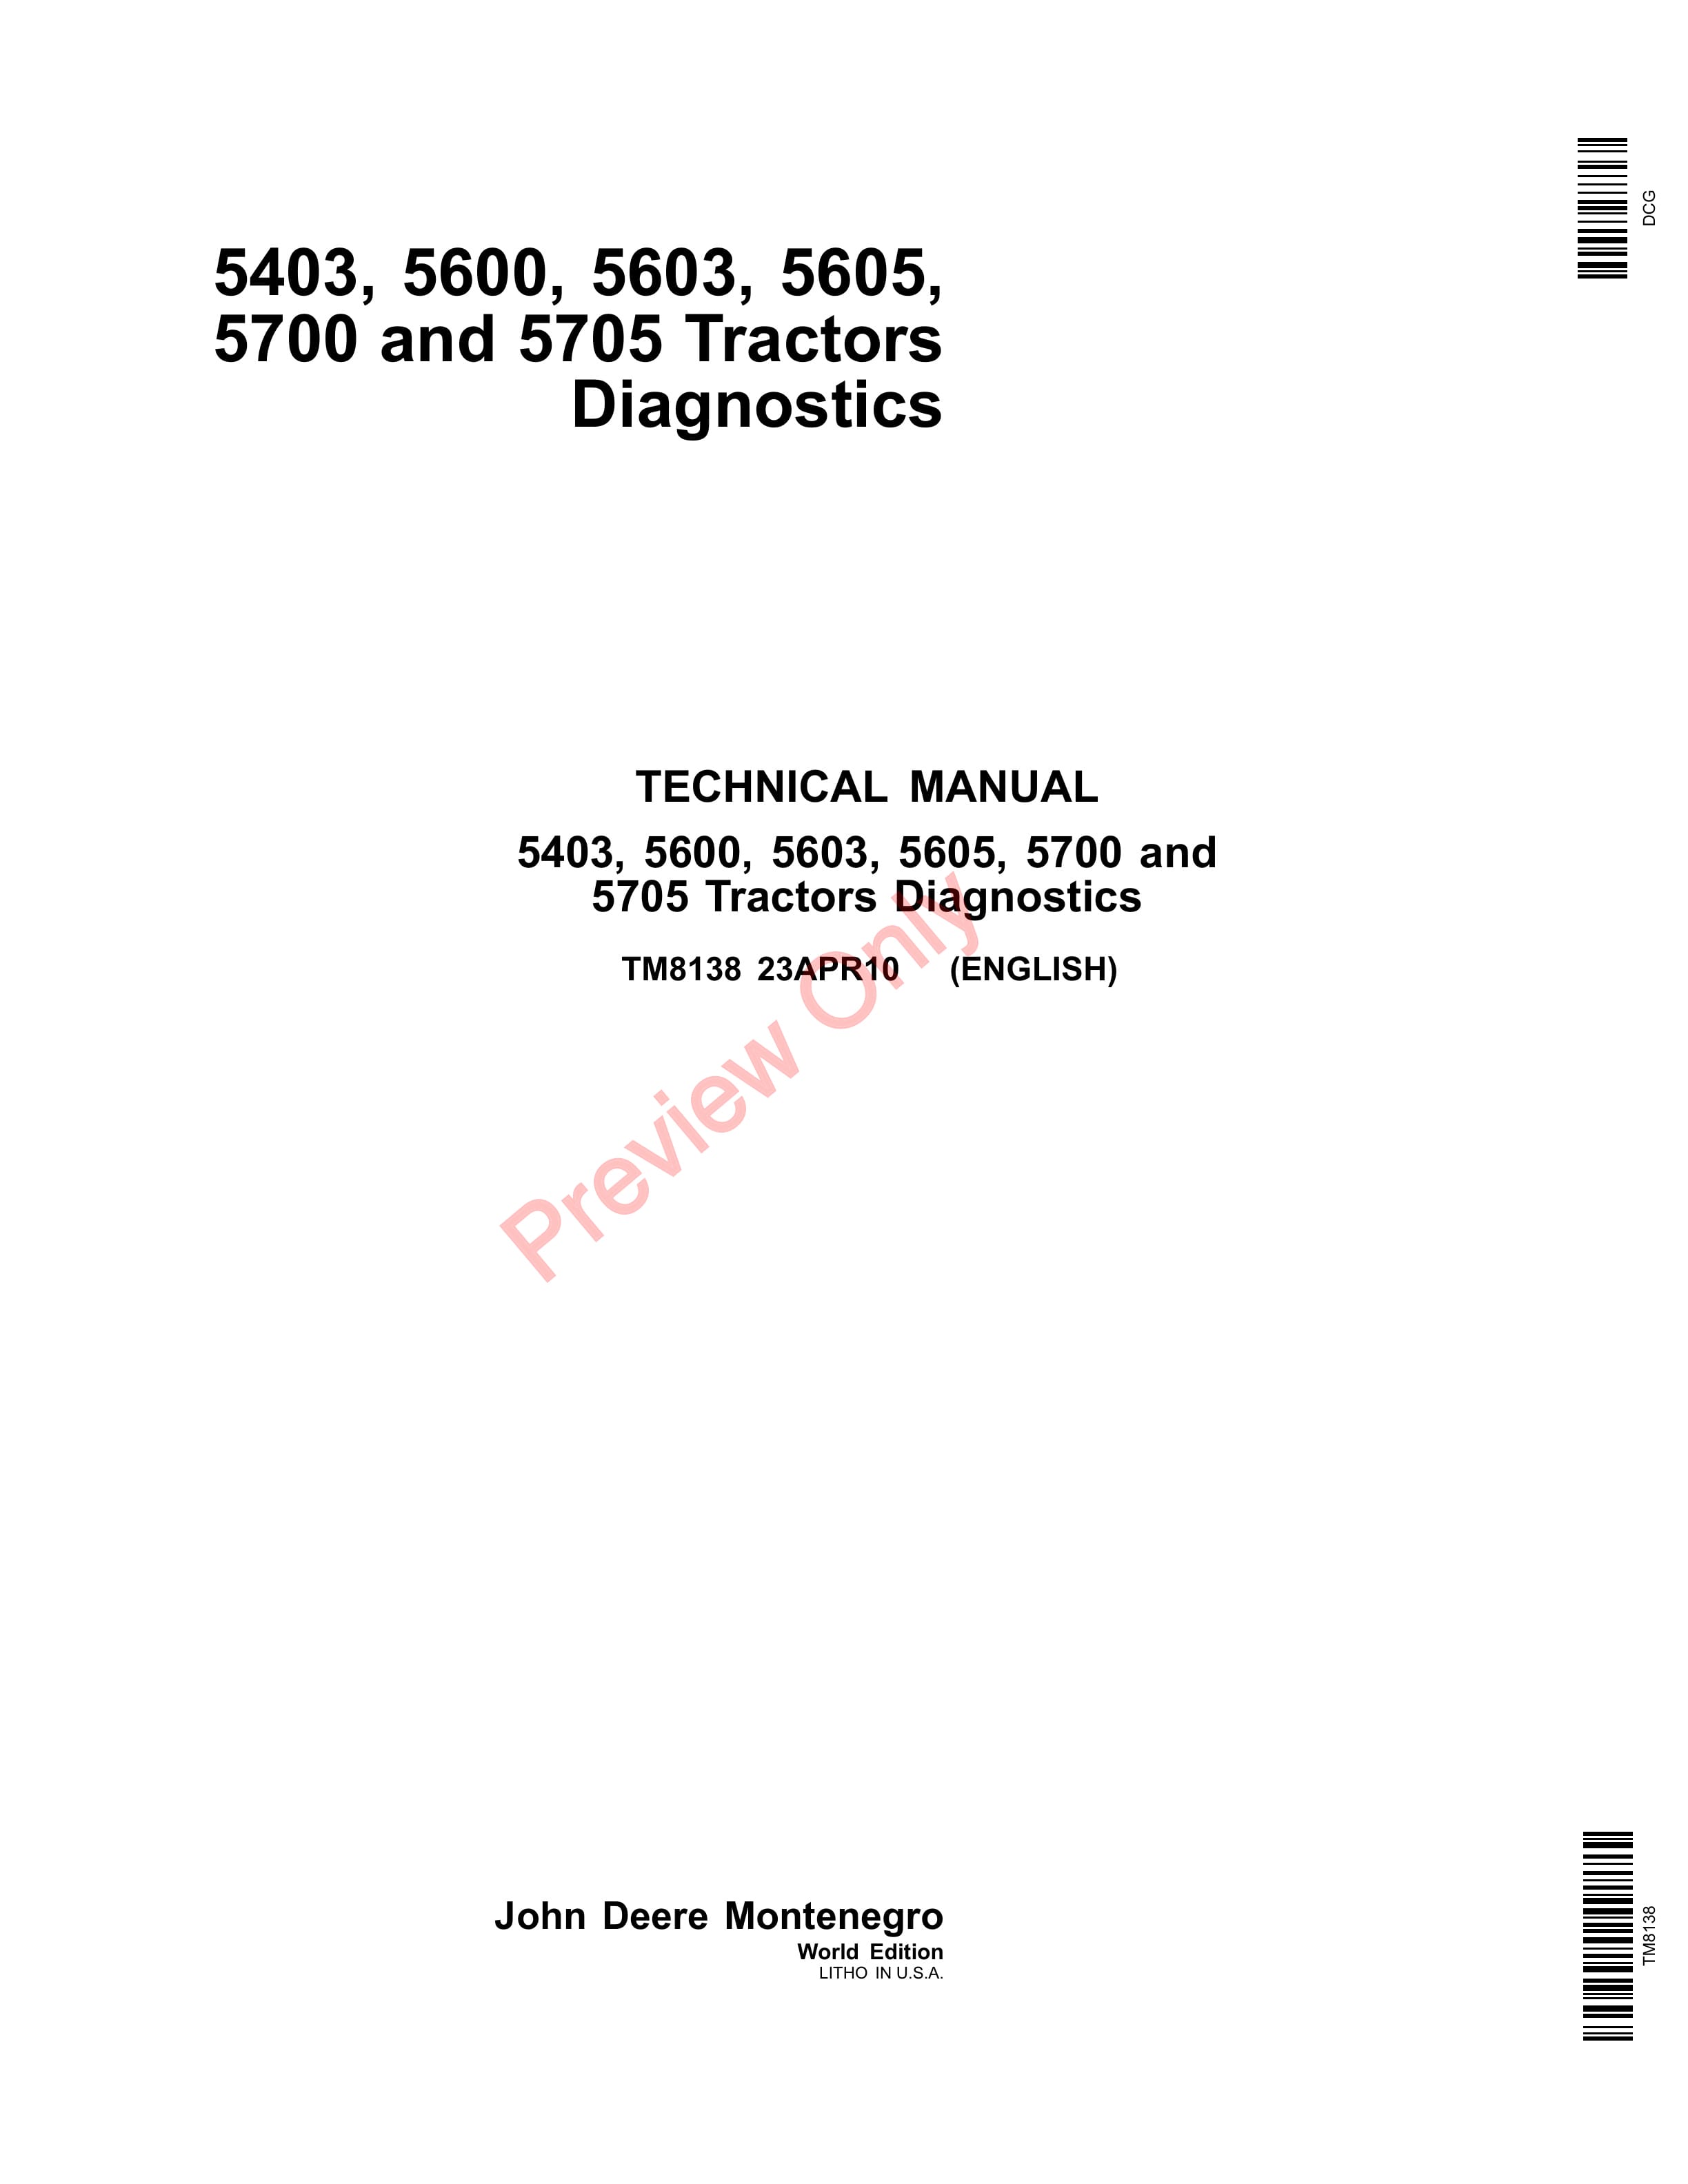 John Deere 5403, 5600, 5603, 5605, 5700, 5705 Tractor Technical Manual TM8138 23APR10-1